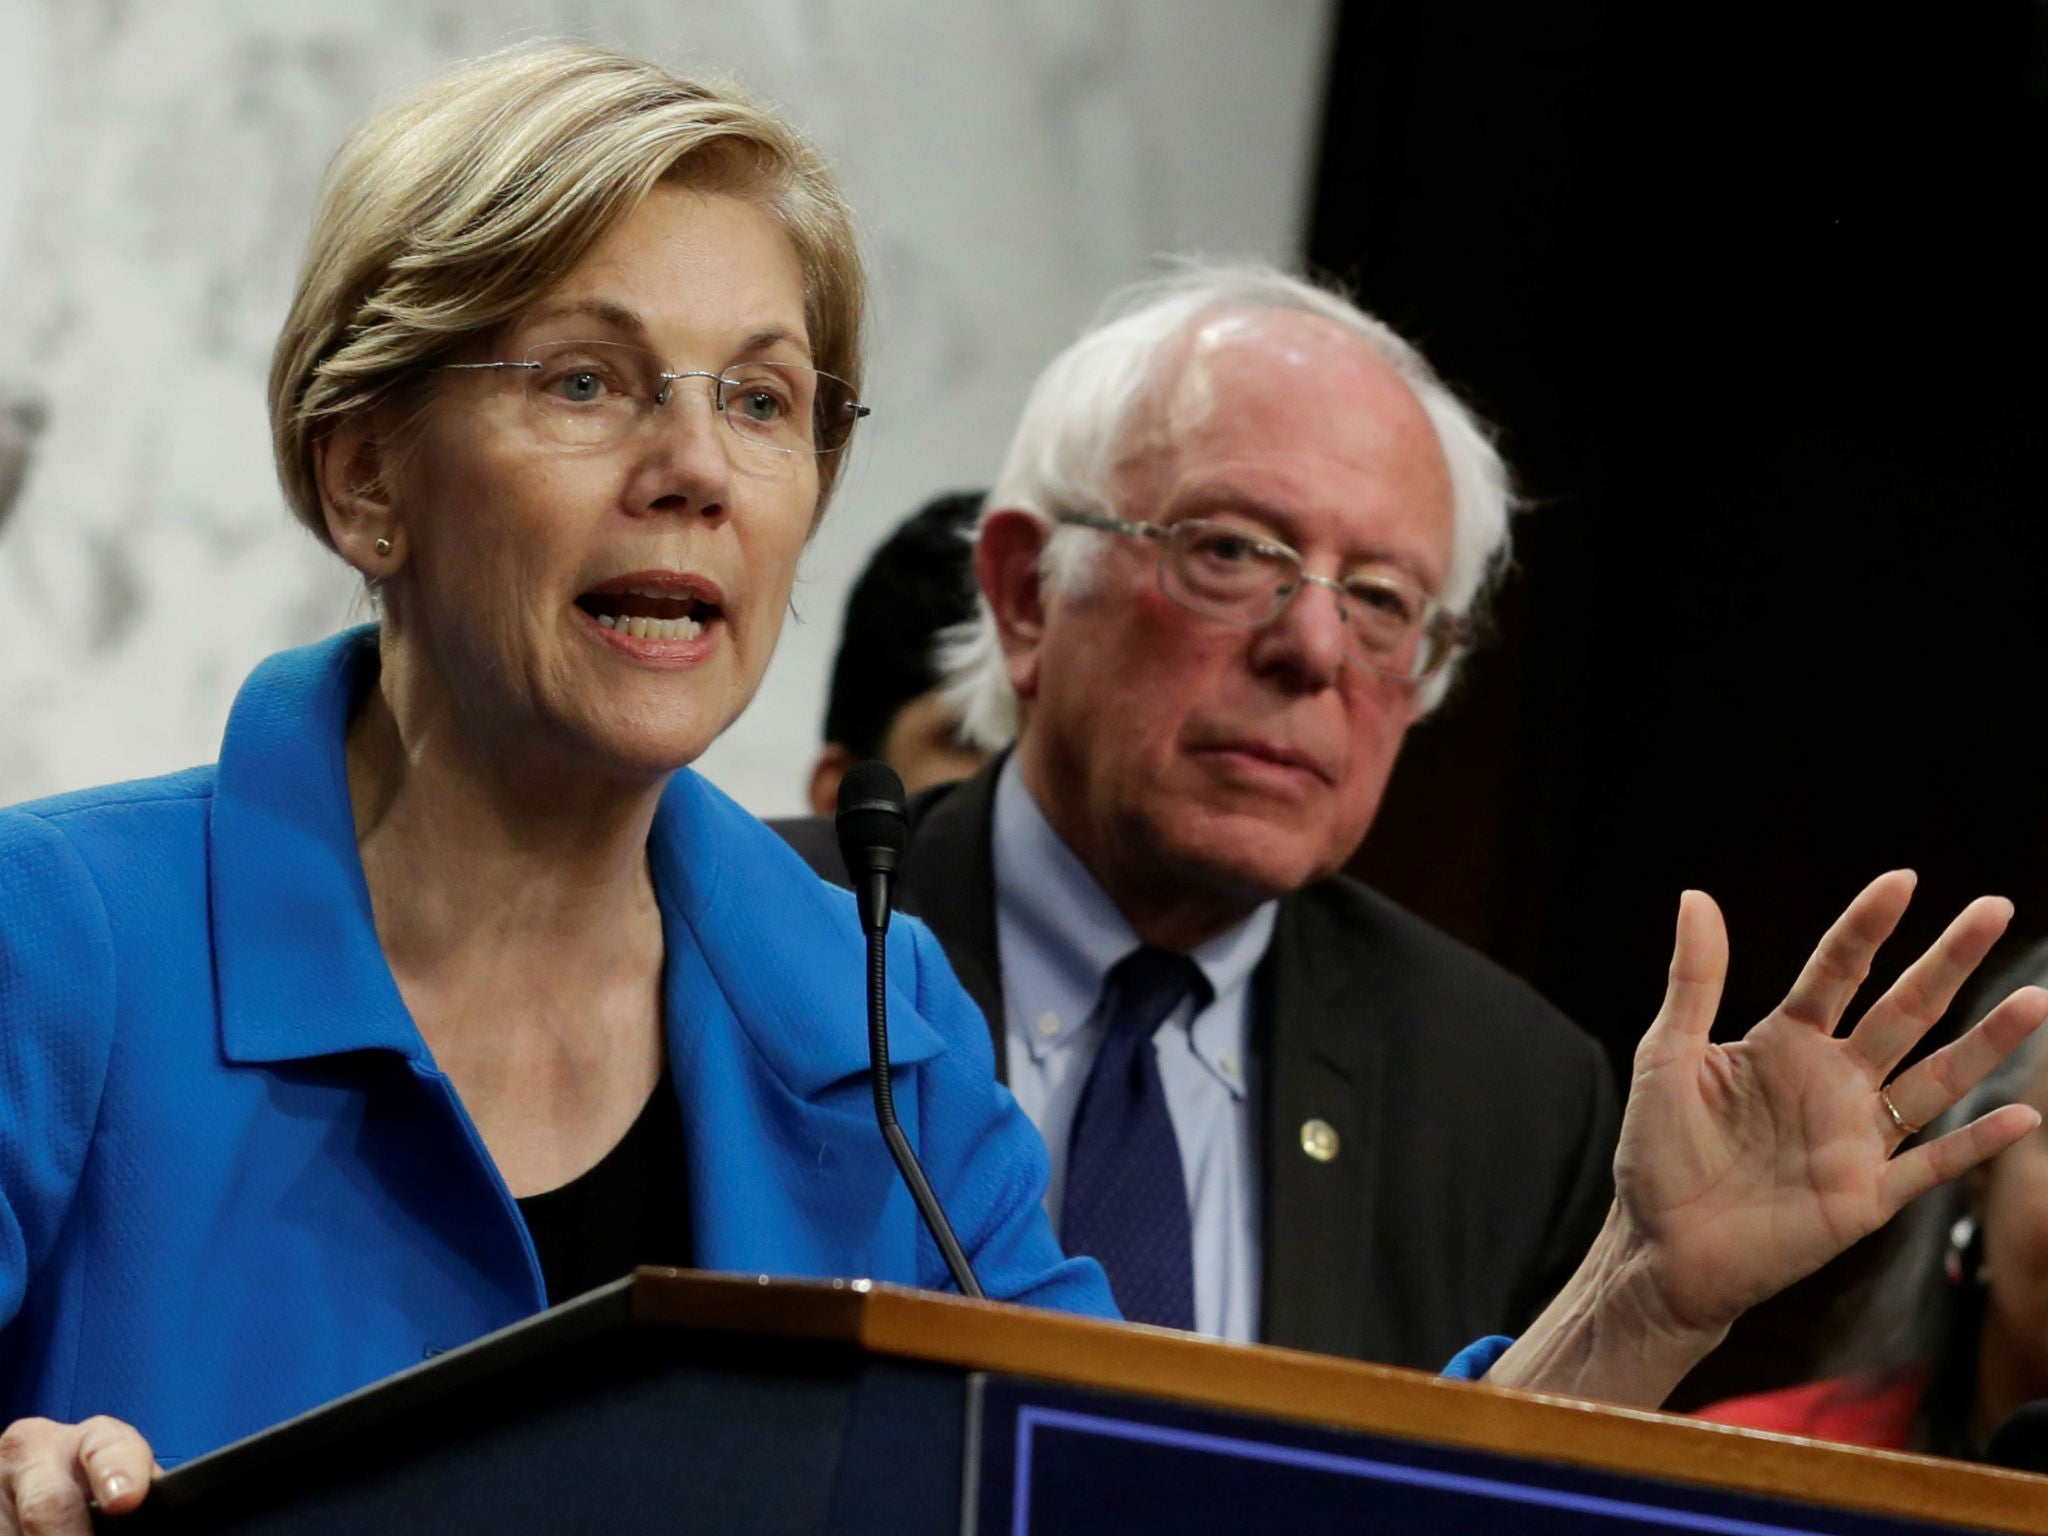 Senator Elizabeth Warren and Senator Bernie Sanders promote universal healthcare in Washington on September 13, 2017